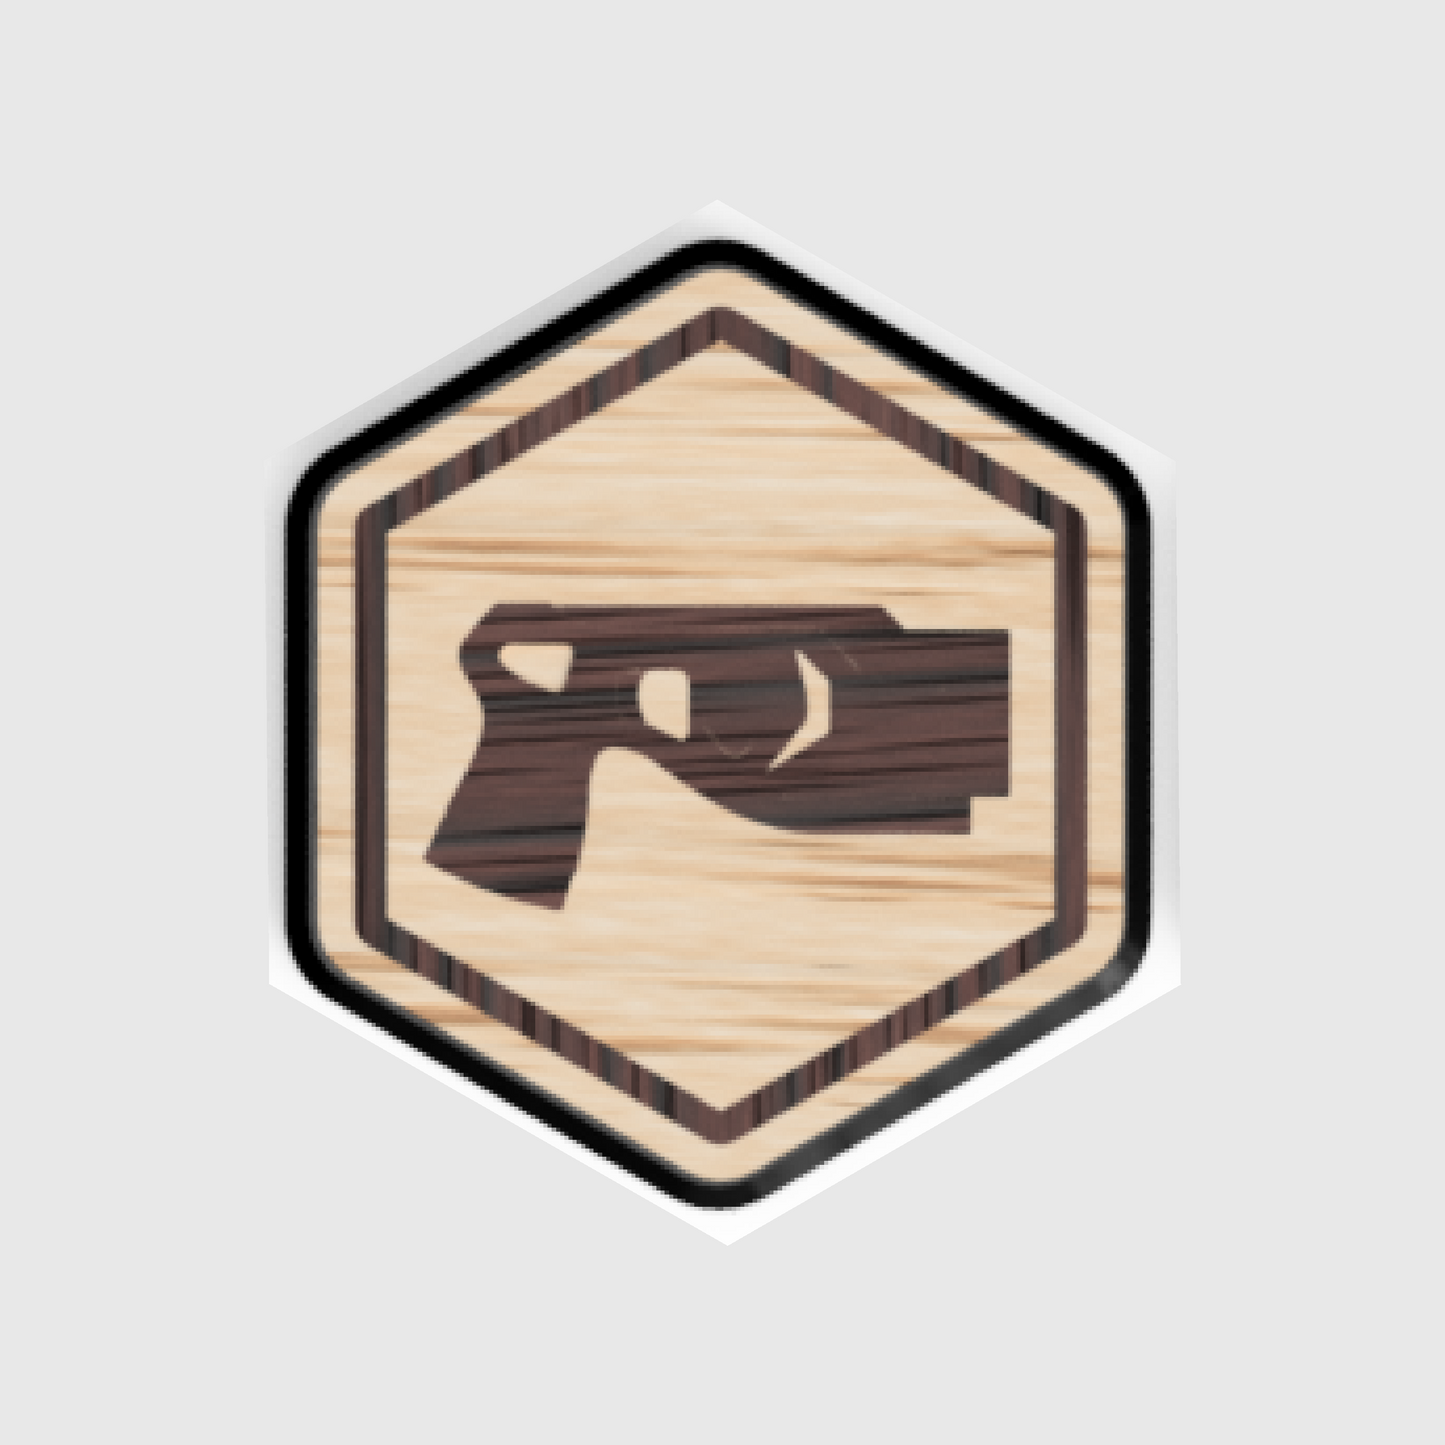 Taser Icon Wooden Hex Patch - Velcro